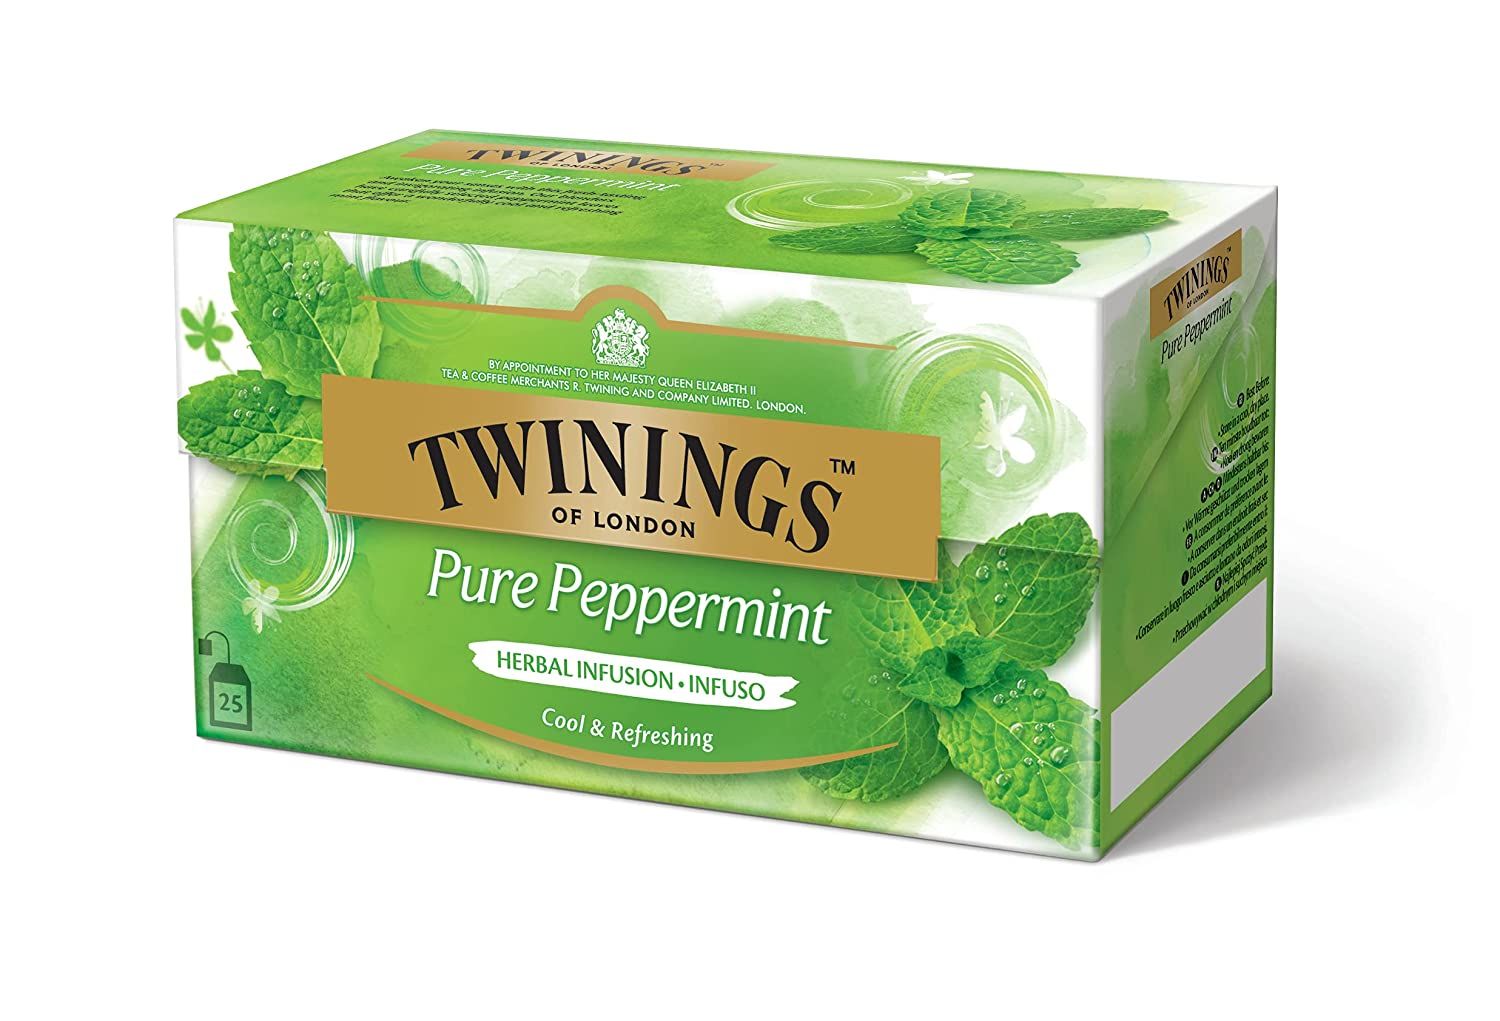 Twinings Pure Peppermint Tea Image